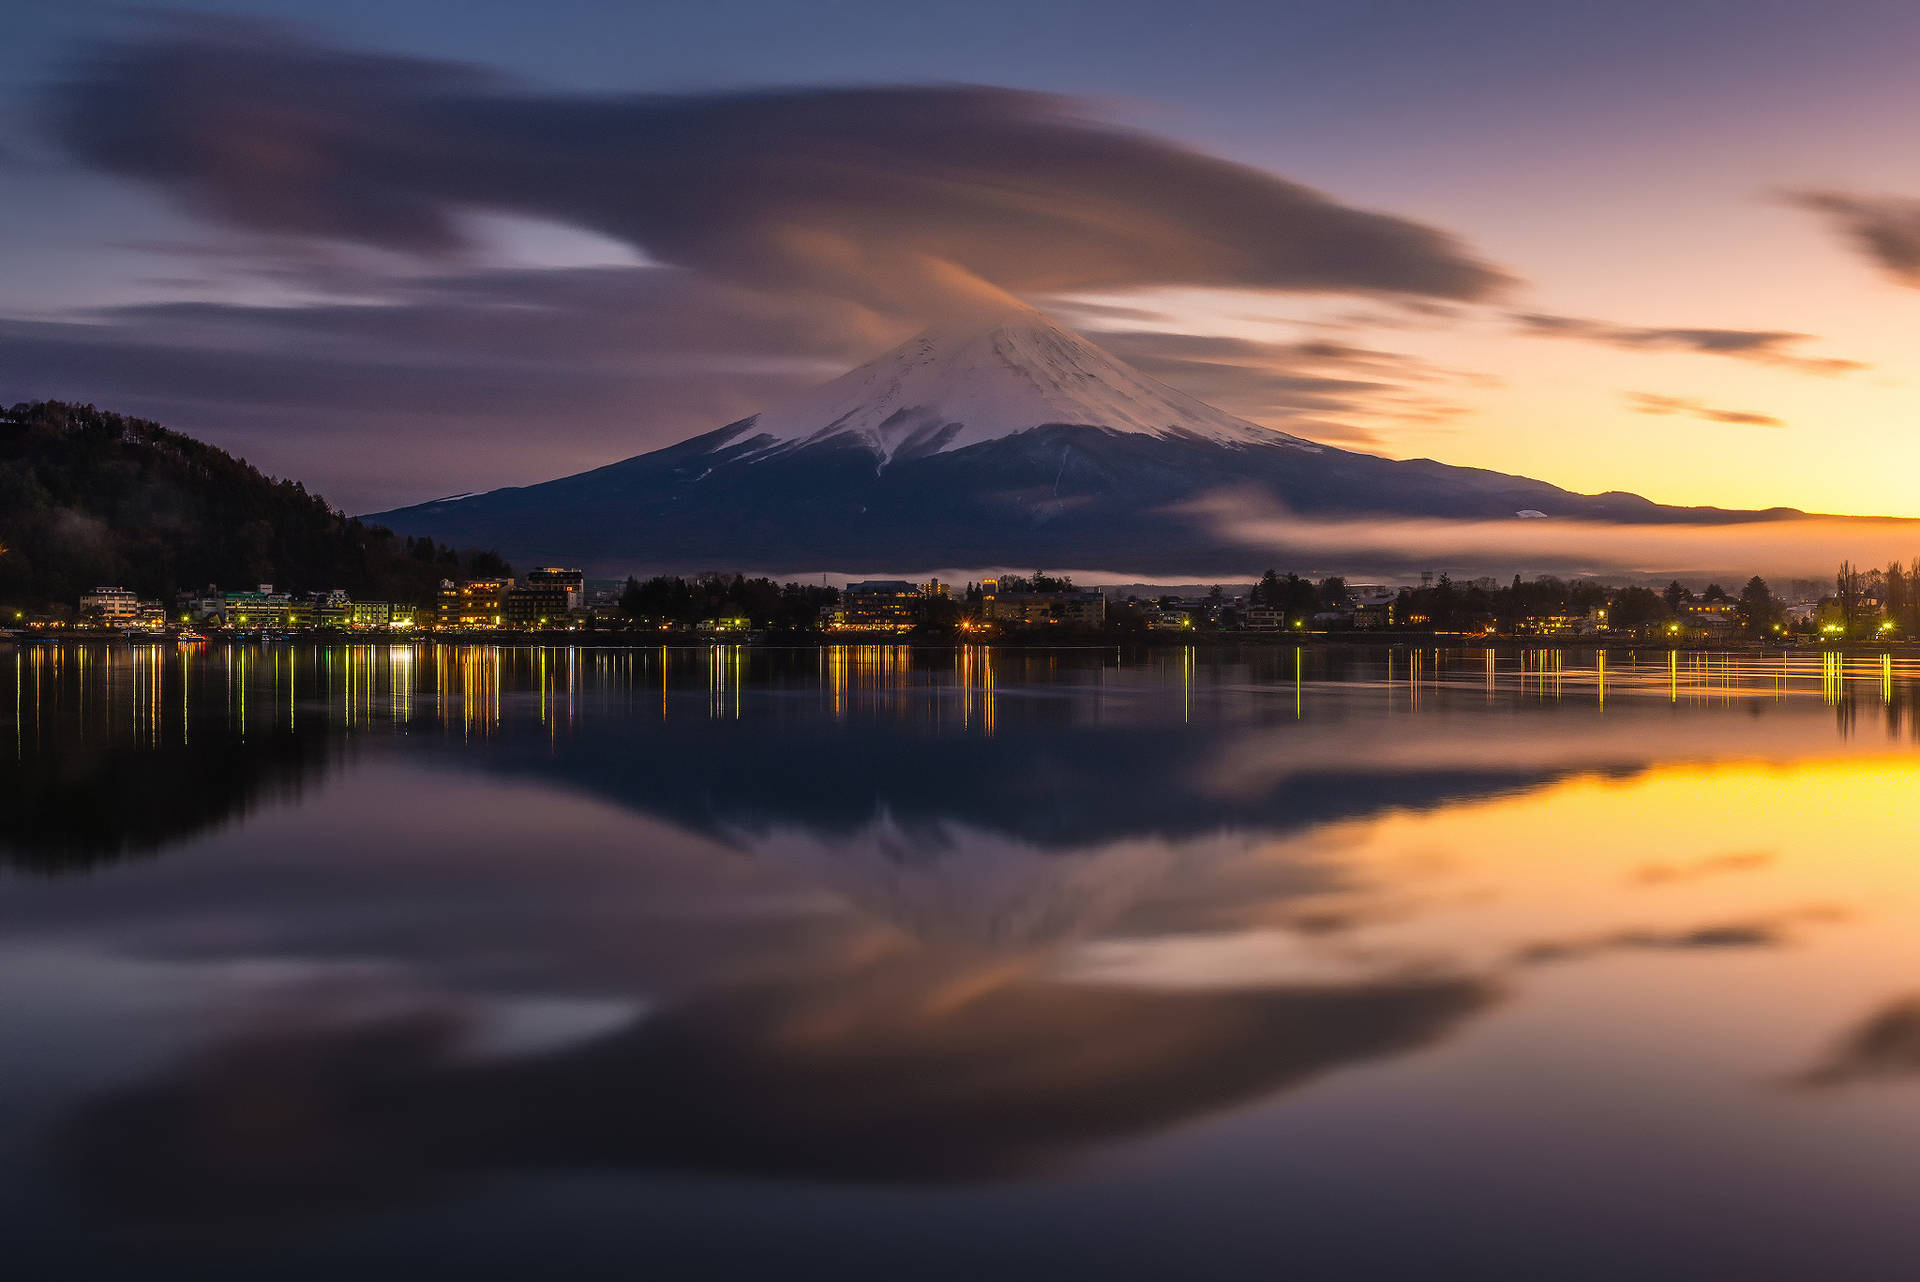 Mount Fuji Reflection